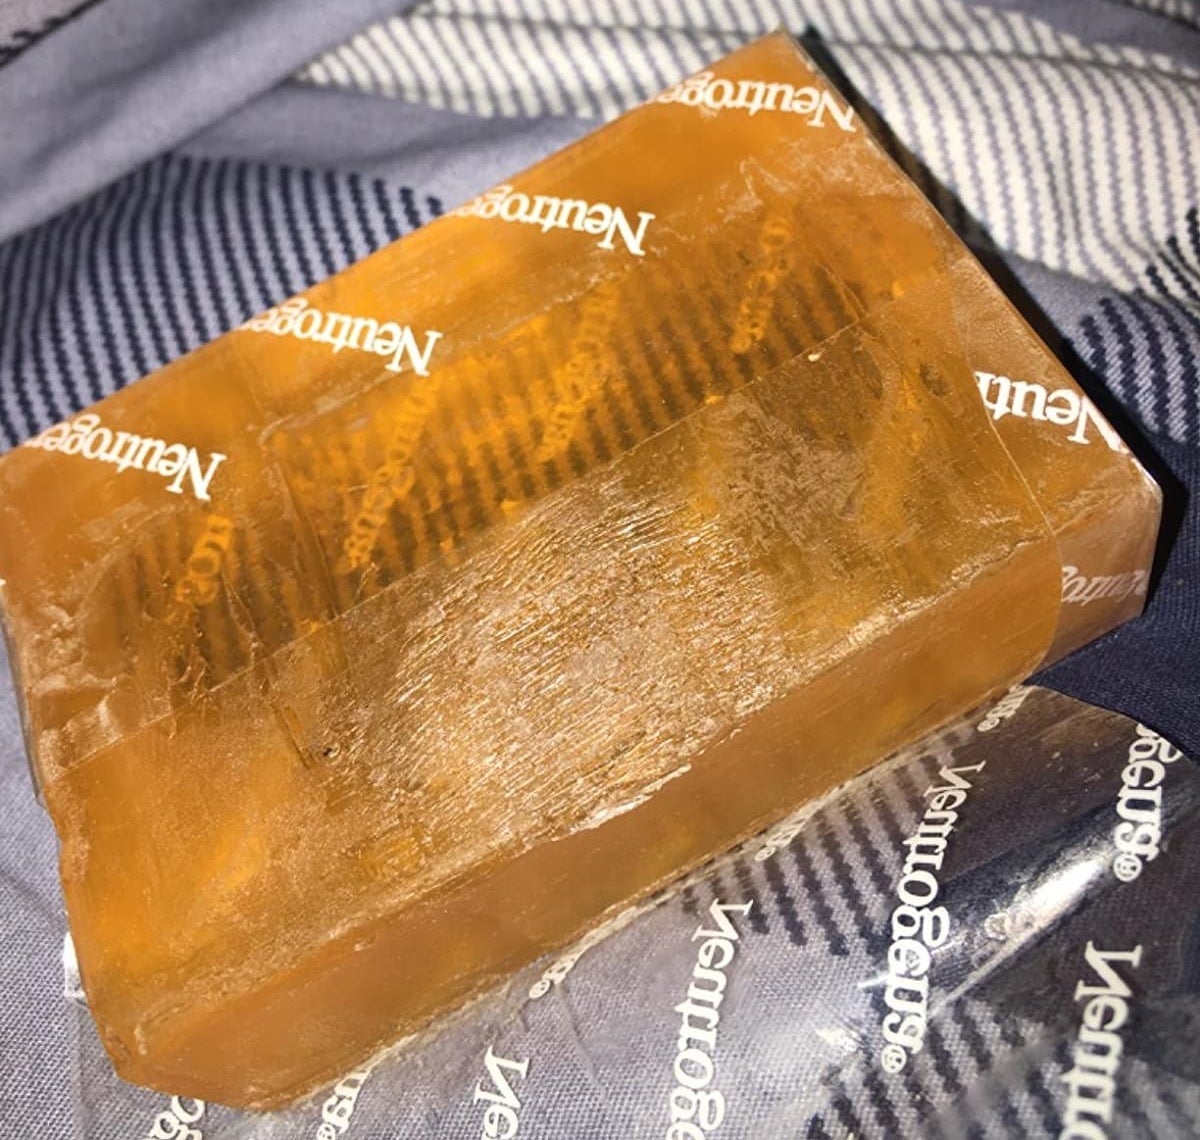 The orange soap bar